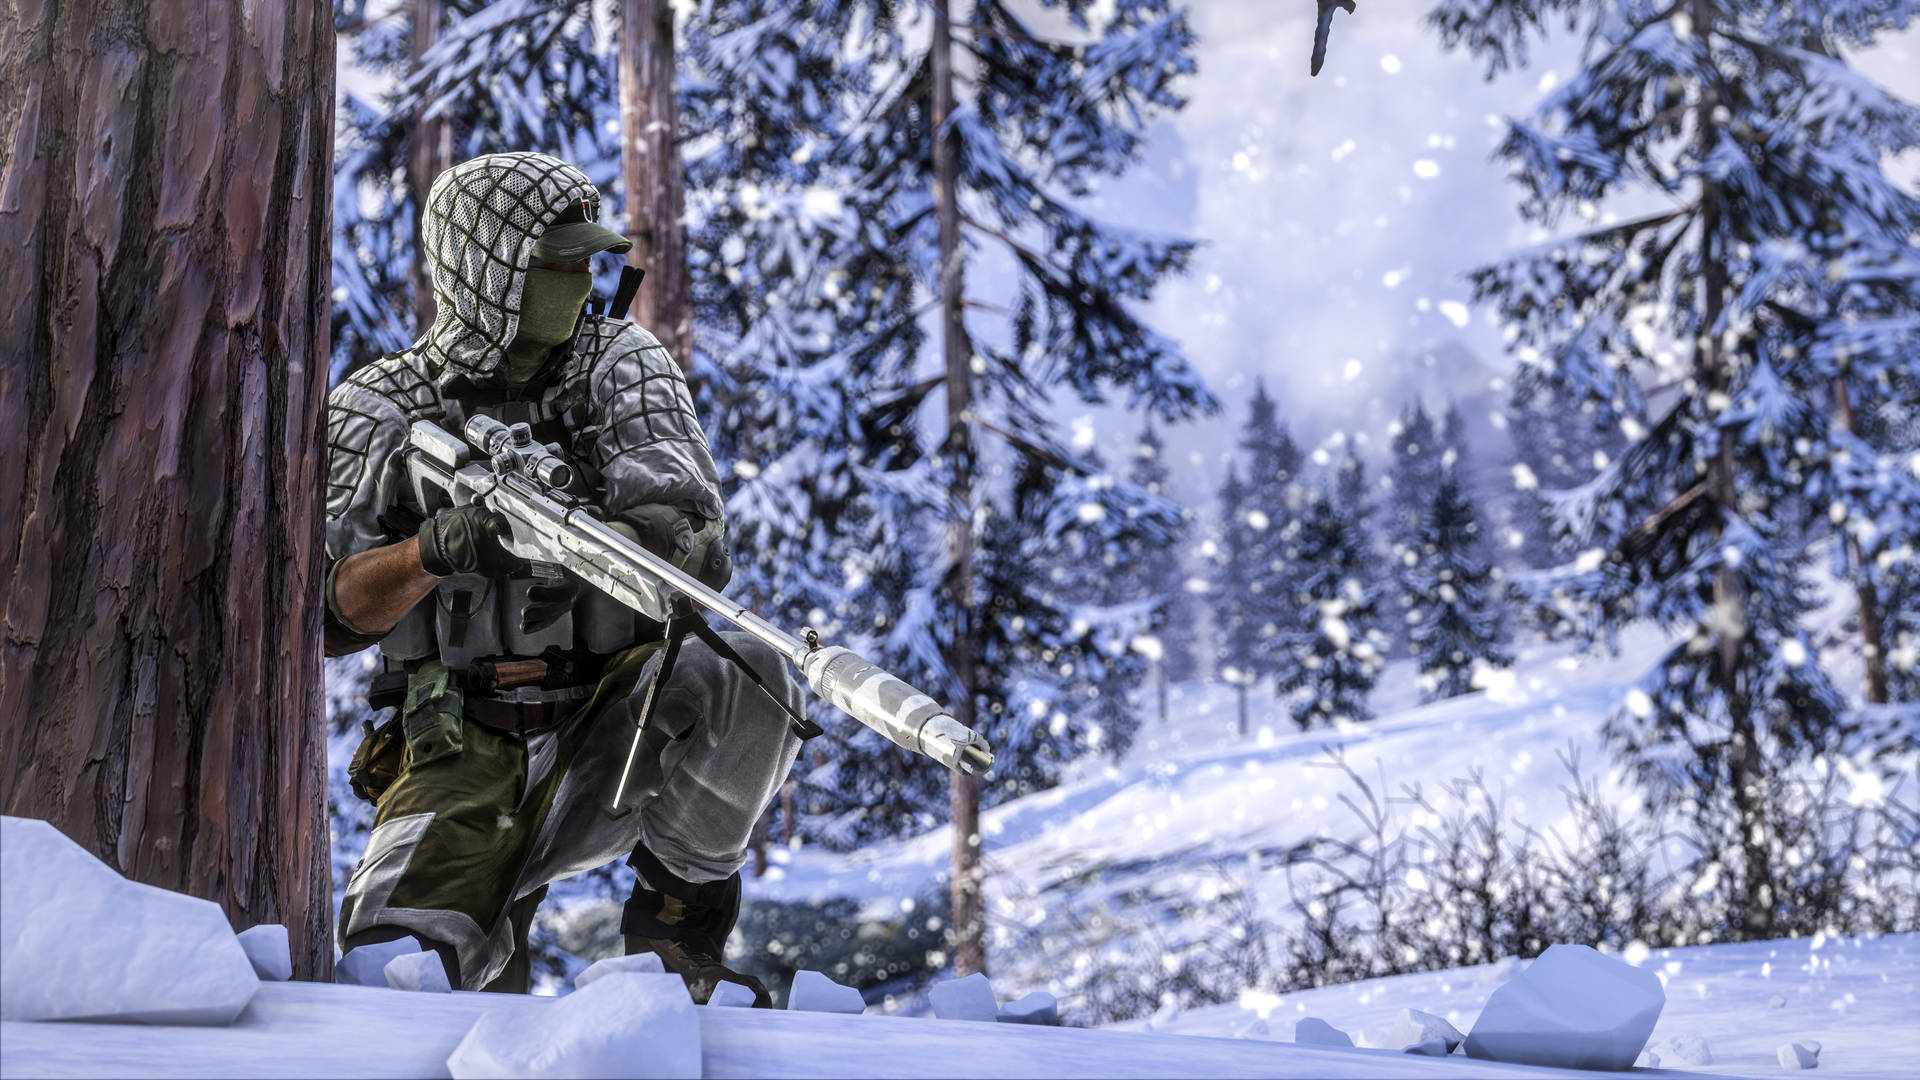 Battlefield 4 Snowy Forest Background